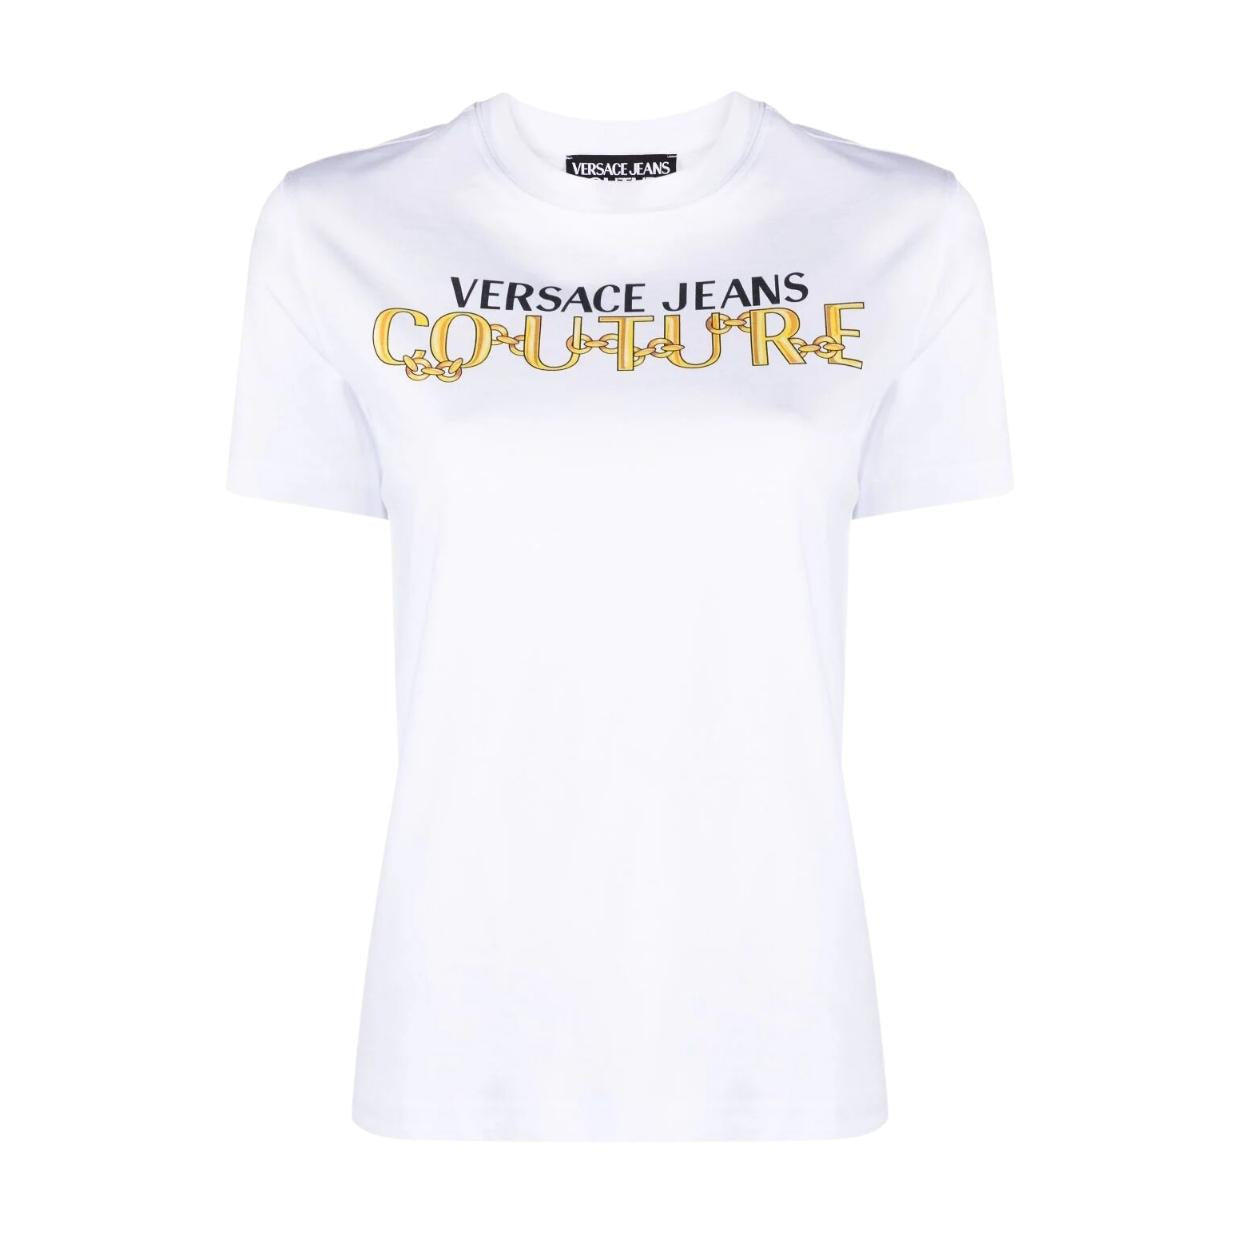 Versace Jeans Couture Chain Logo White T-Shirt – Retro Designer Wear